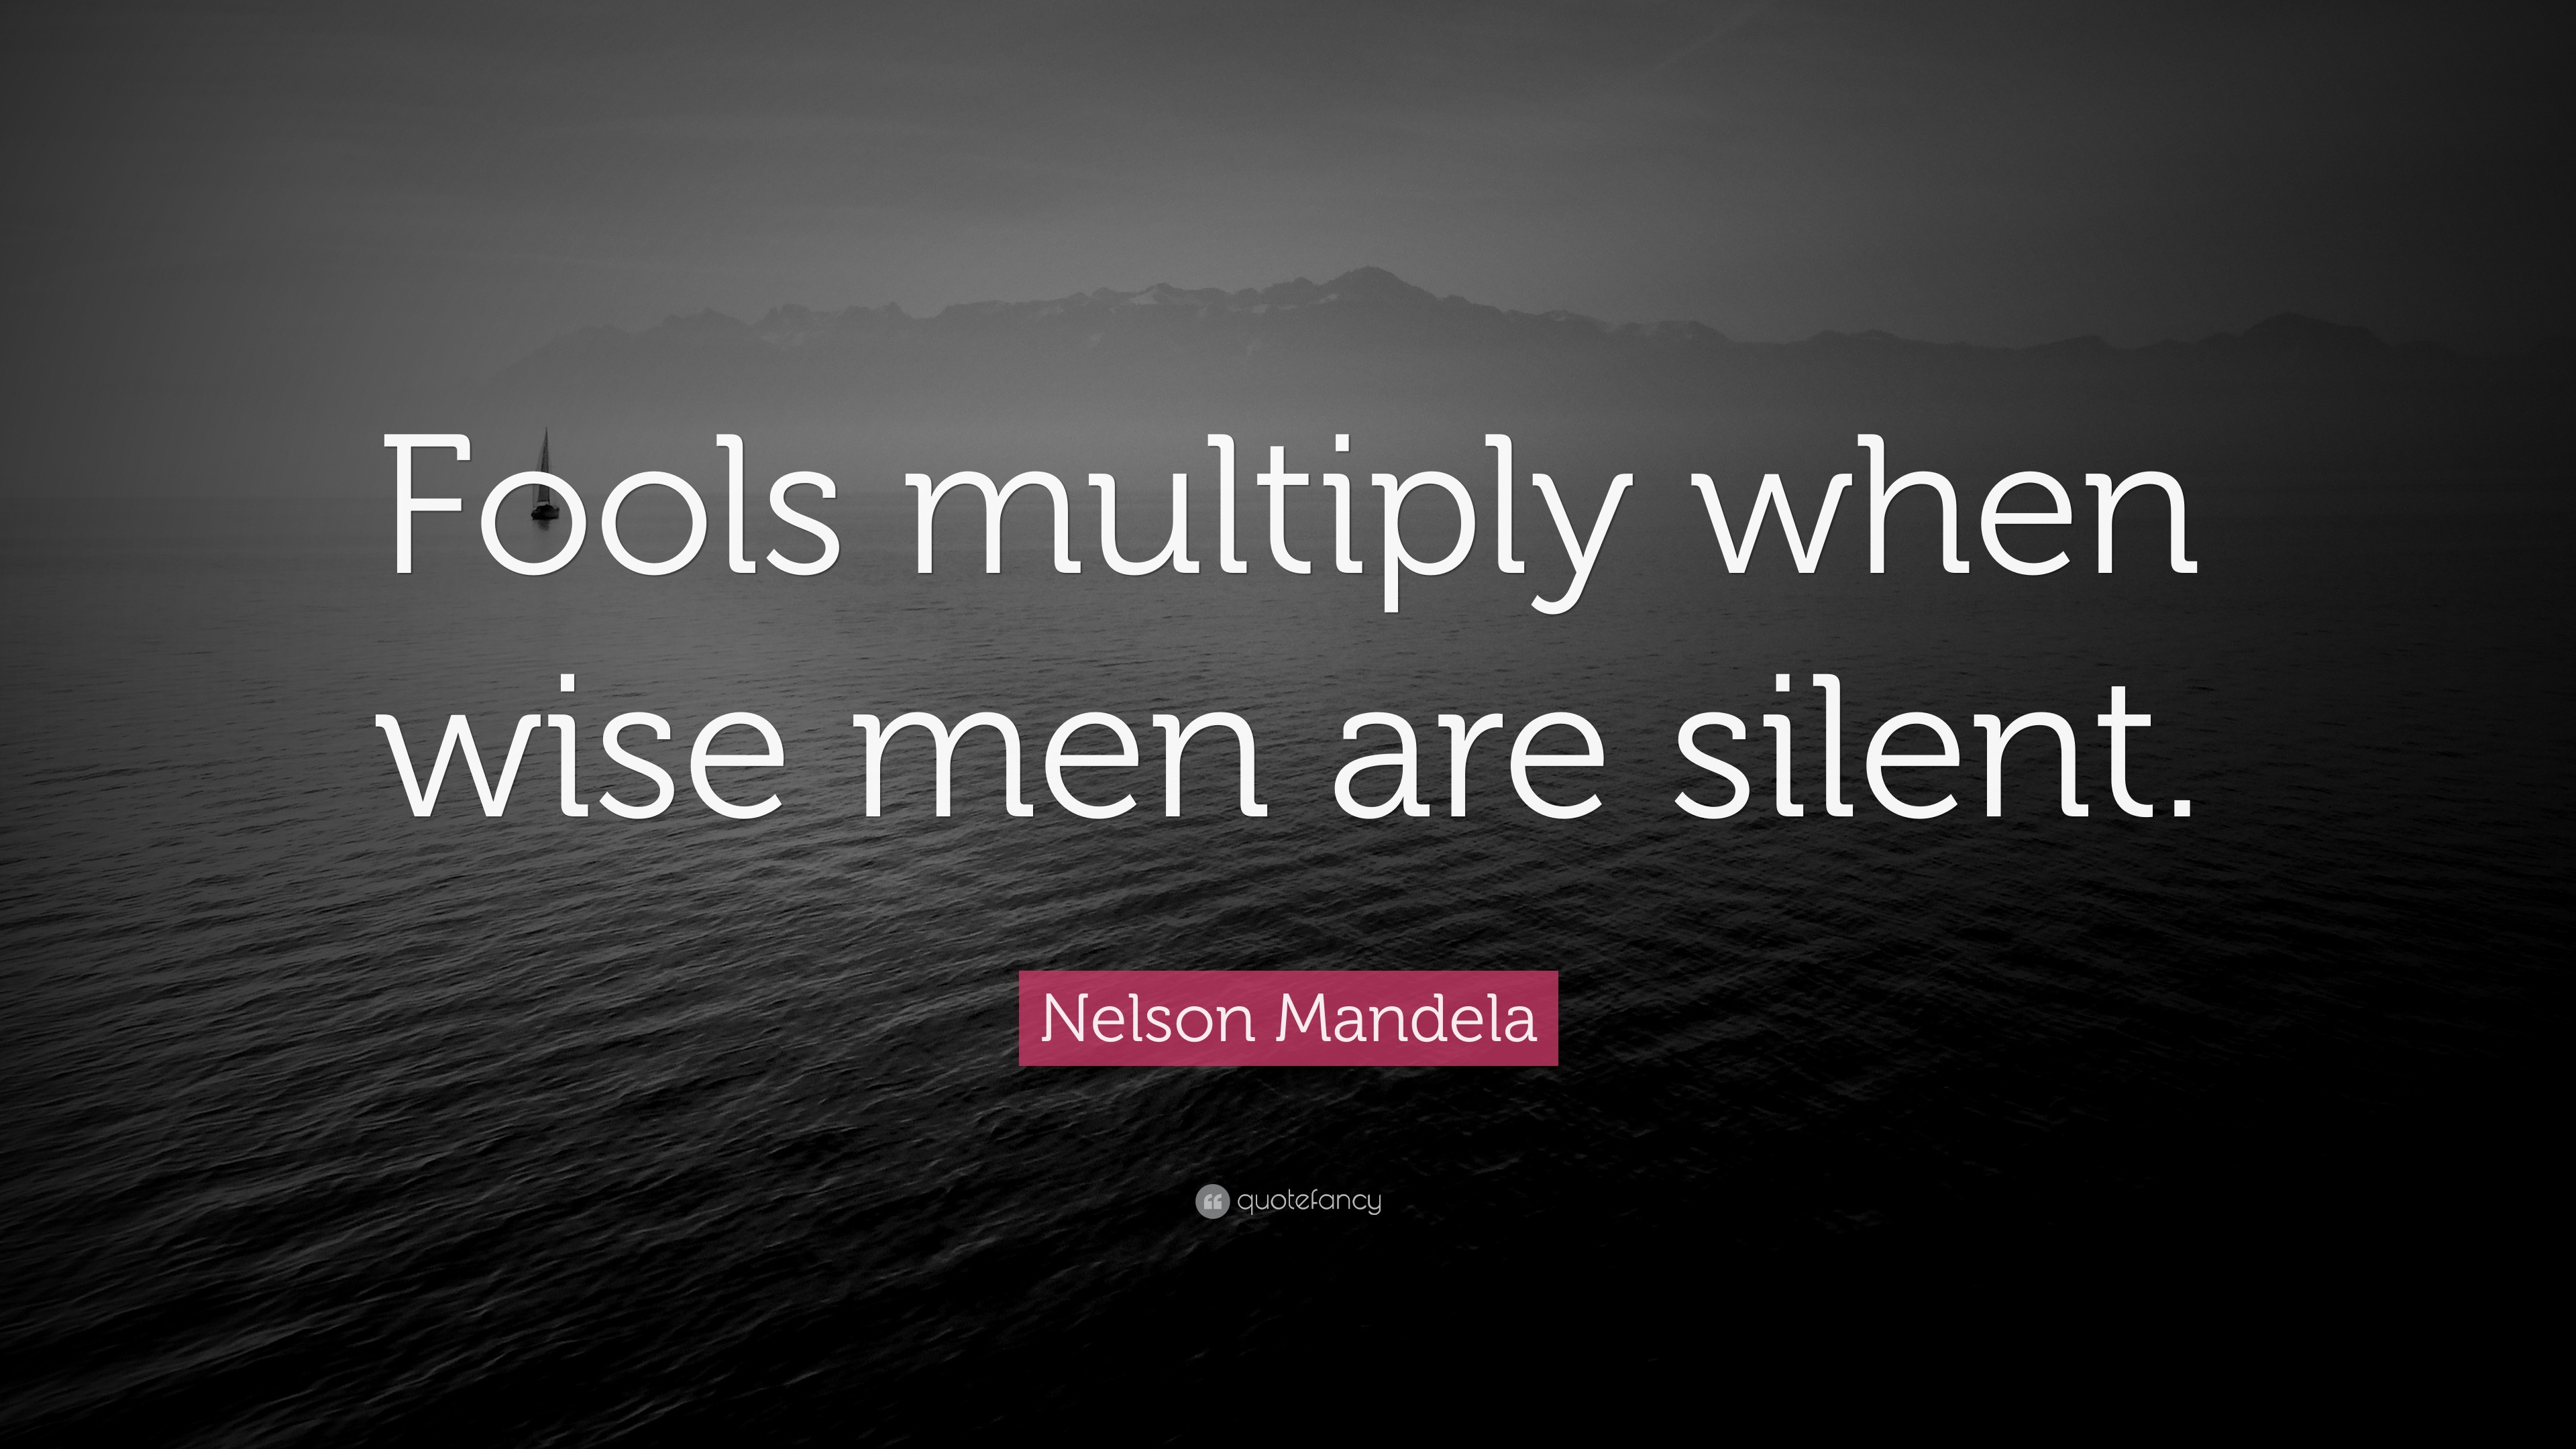 [Image: 2019963-Nelson-Mandela-Quote-Fools-multi...silent.jpg]